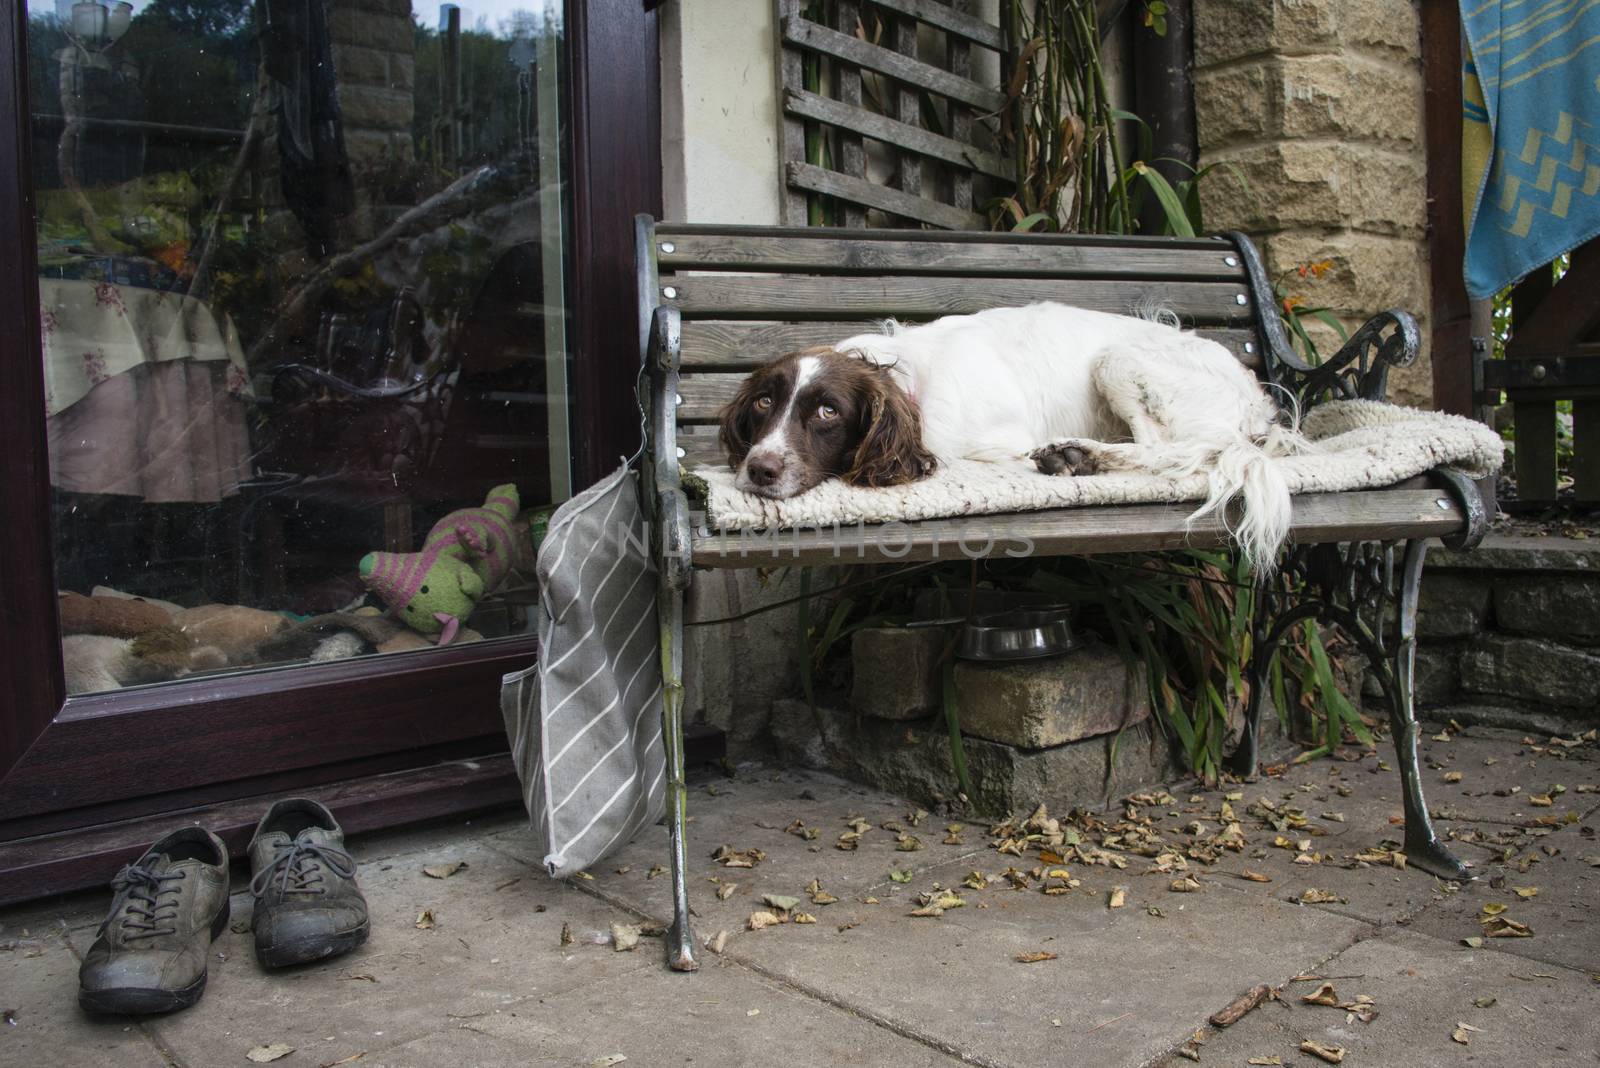 A springer spaniel resting on a bench